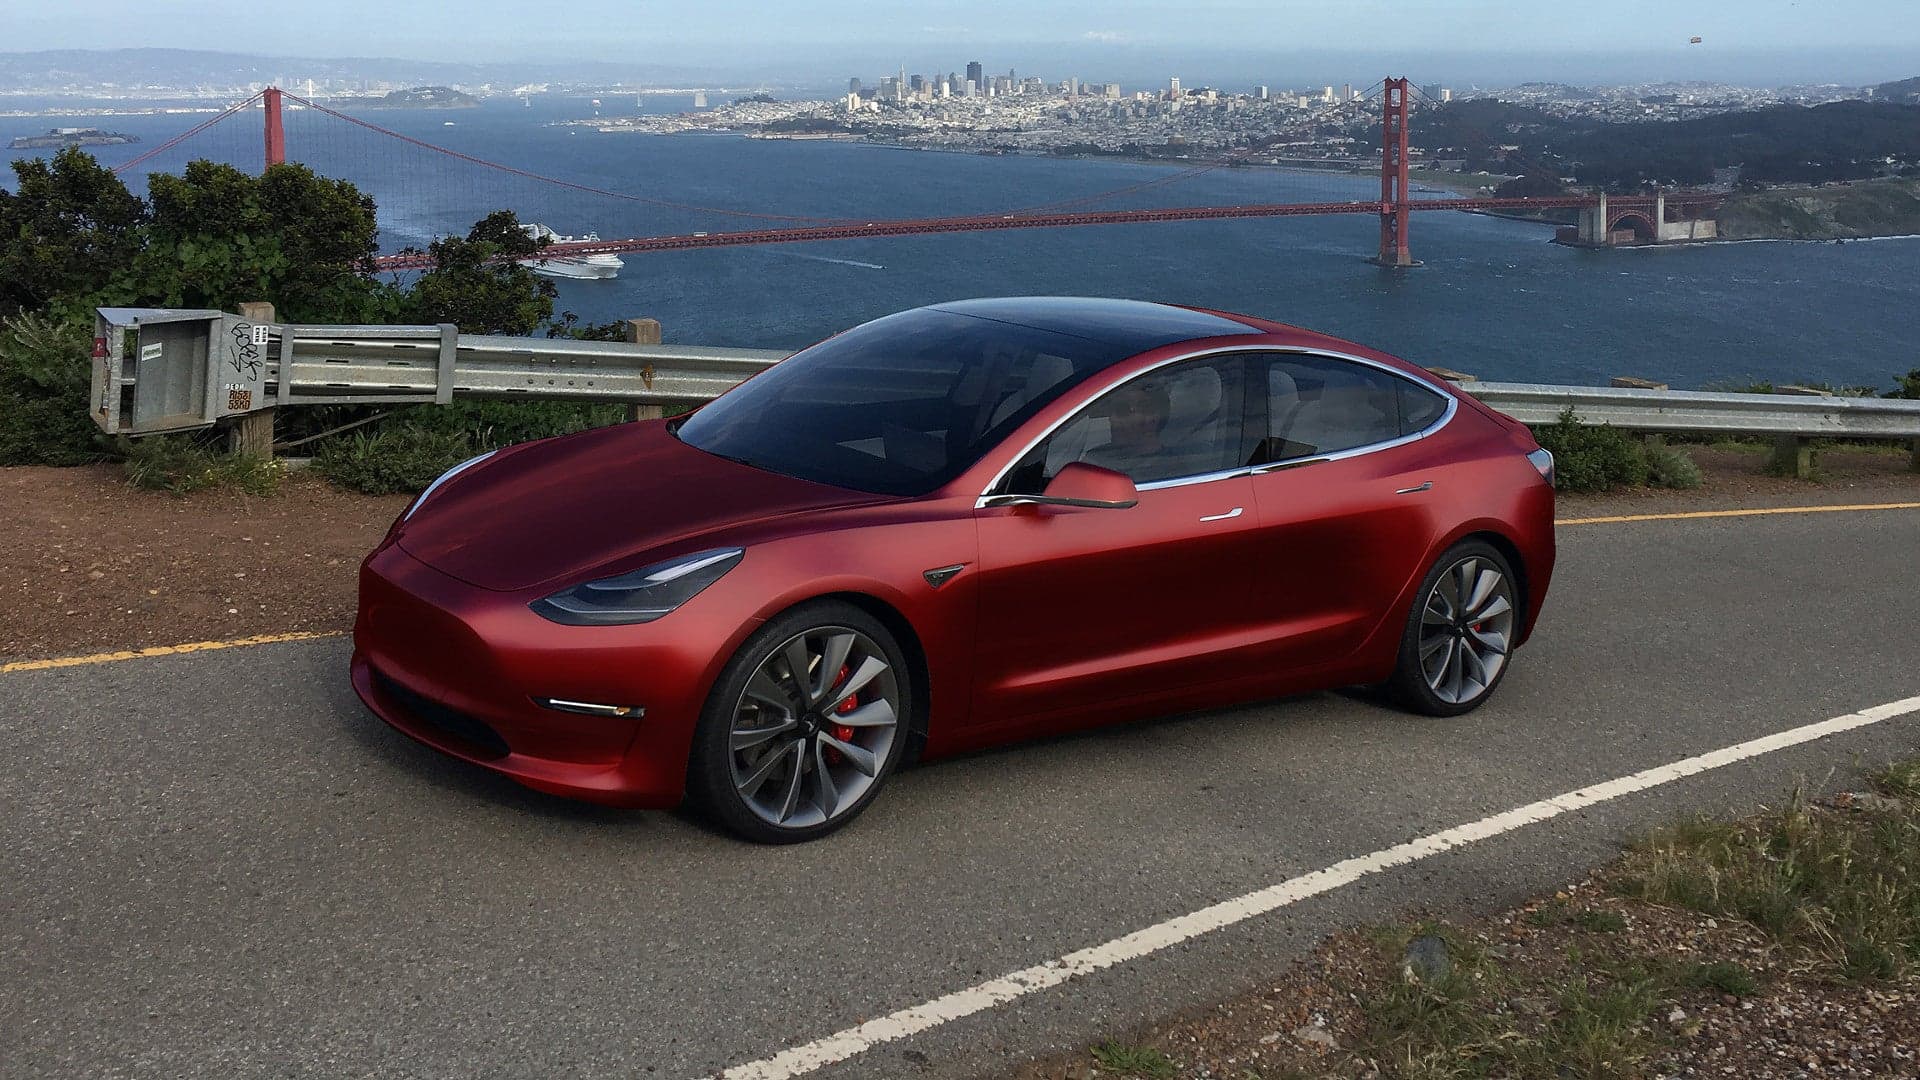 Tesla Set To Build Model 3 Prototypes This Month